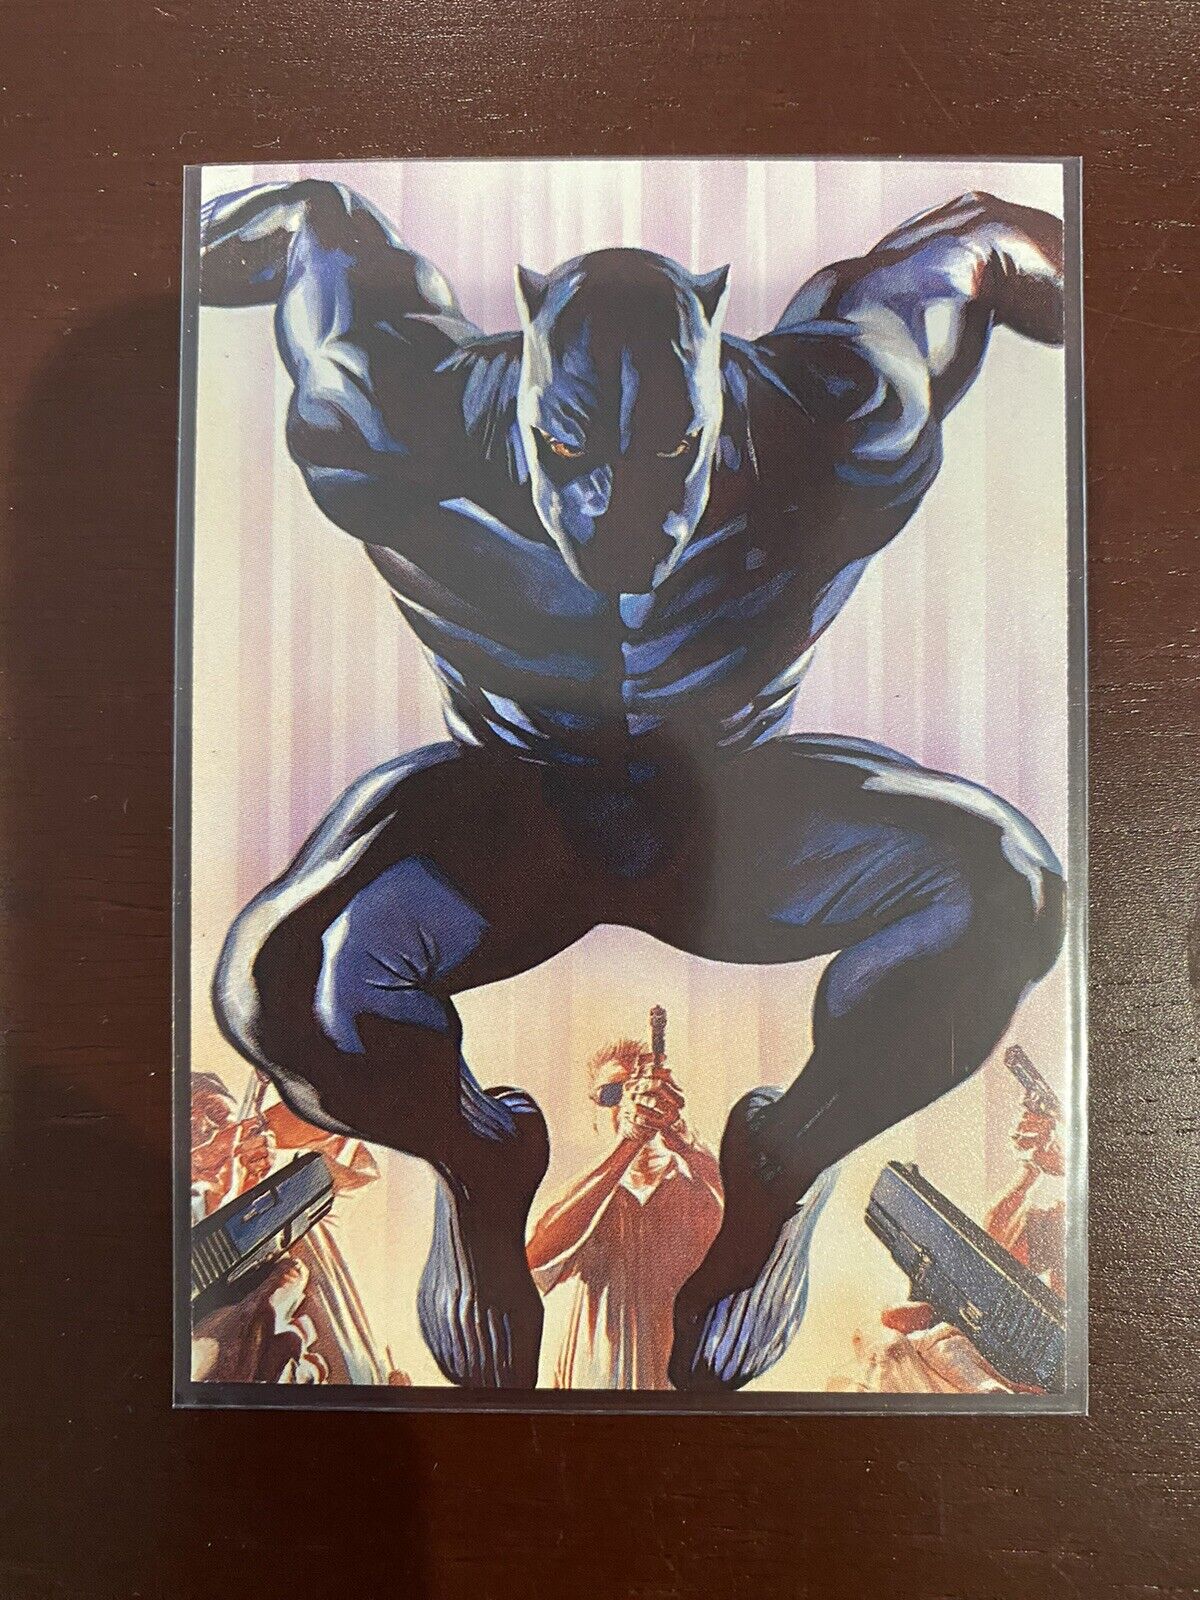 2020 Panini Marvel 80th Anniversary Card: Black Panther C14/50